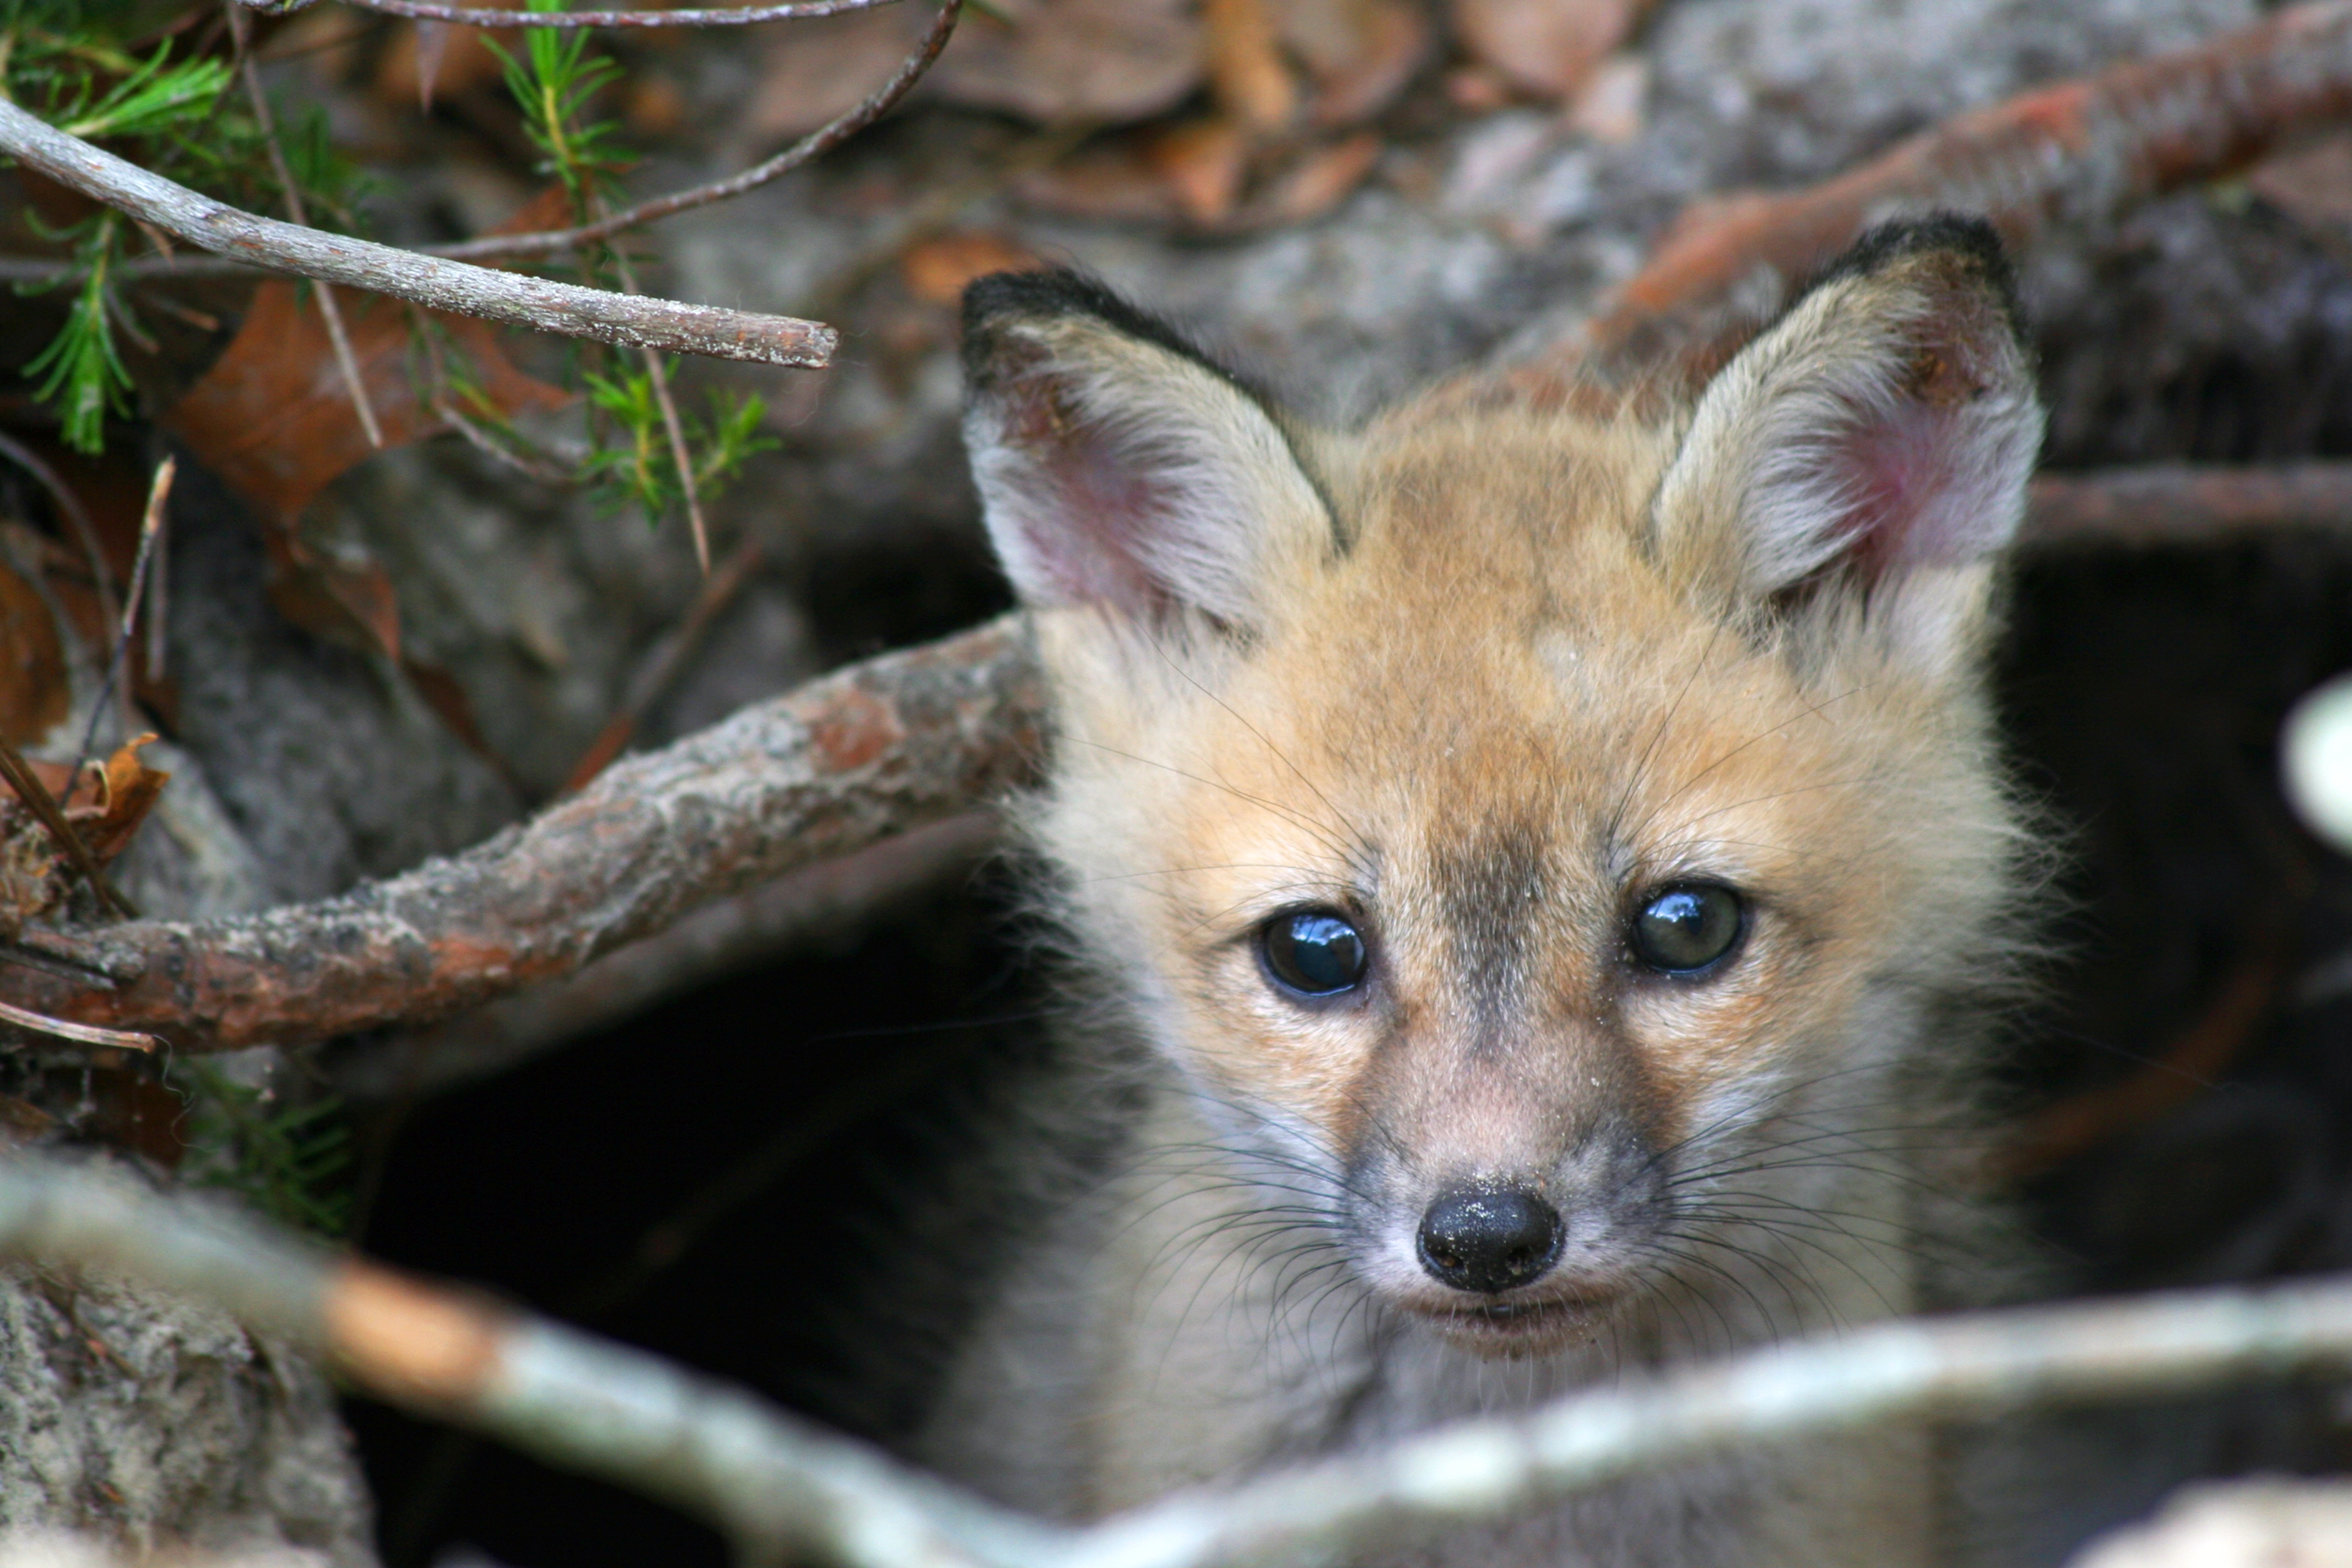 A baby fox pops it's head from a burrow